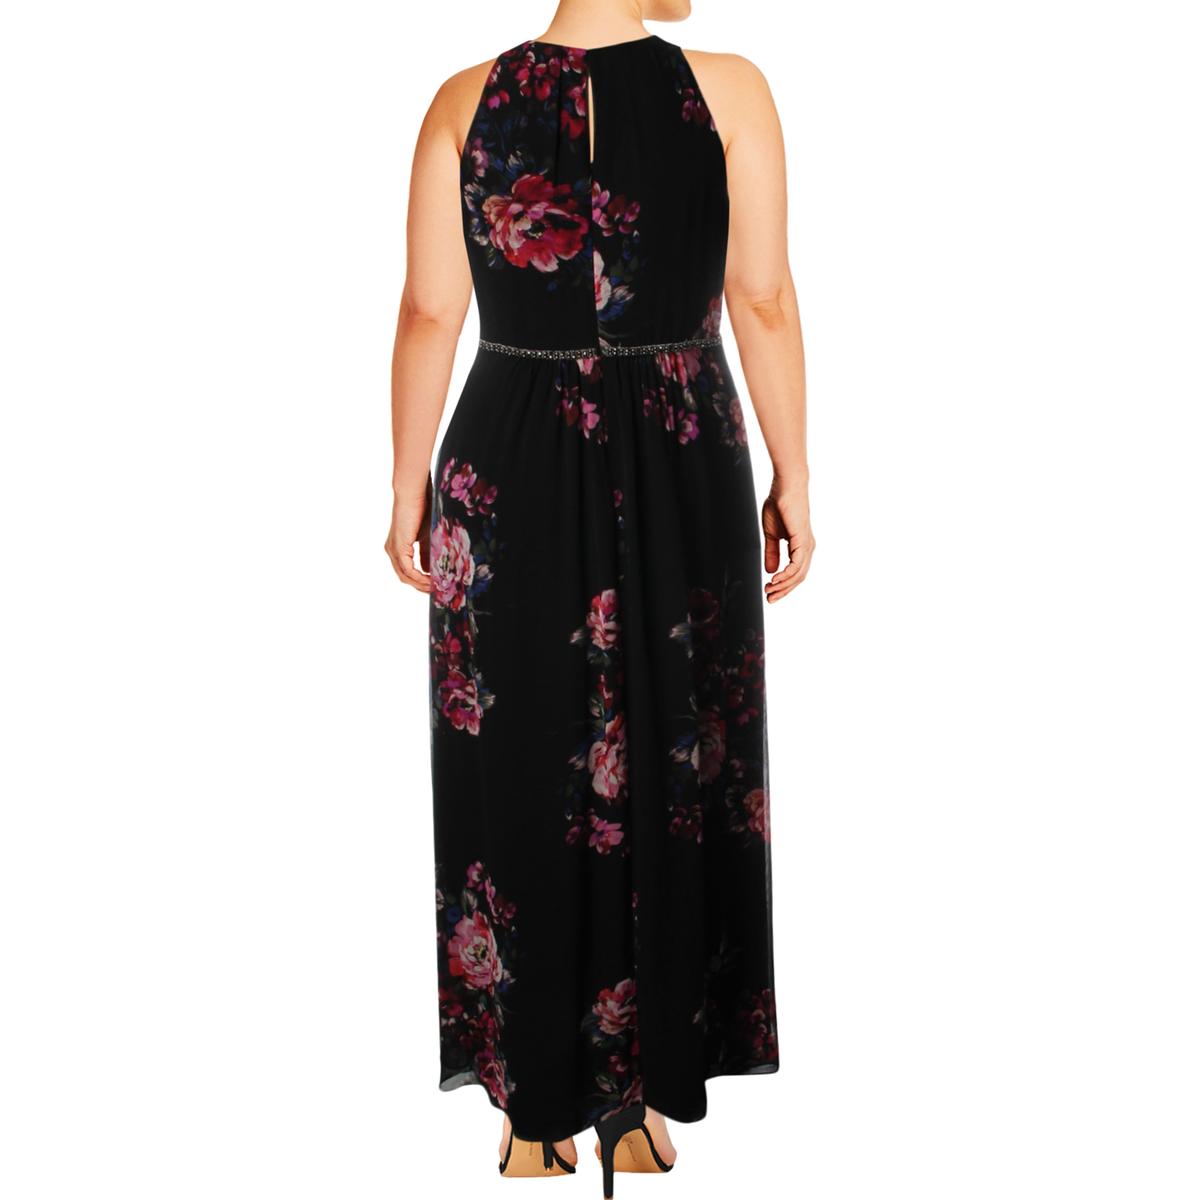 SLNY Womens Black Floral Print Embellished Sleeveless Maxi Dress 14 ...